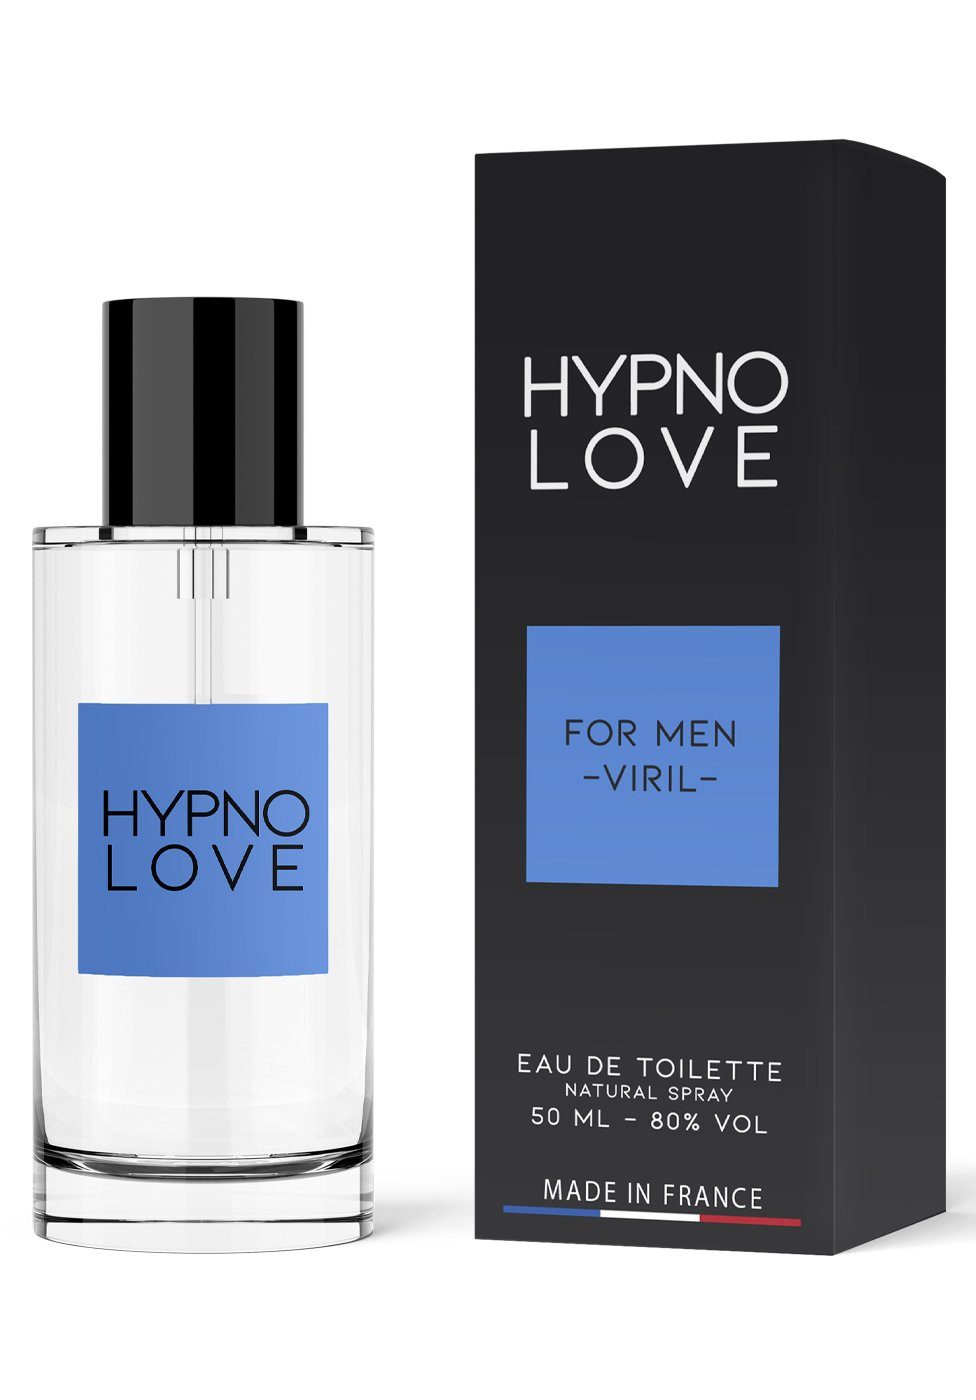 Parfum de Hypno-Love Eau Ruf for Parfum Men